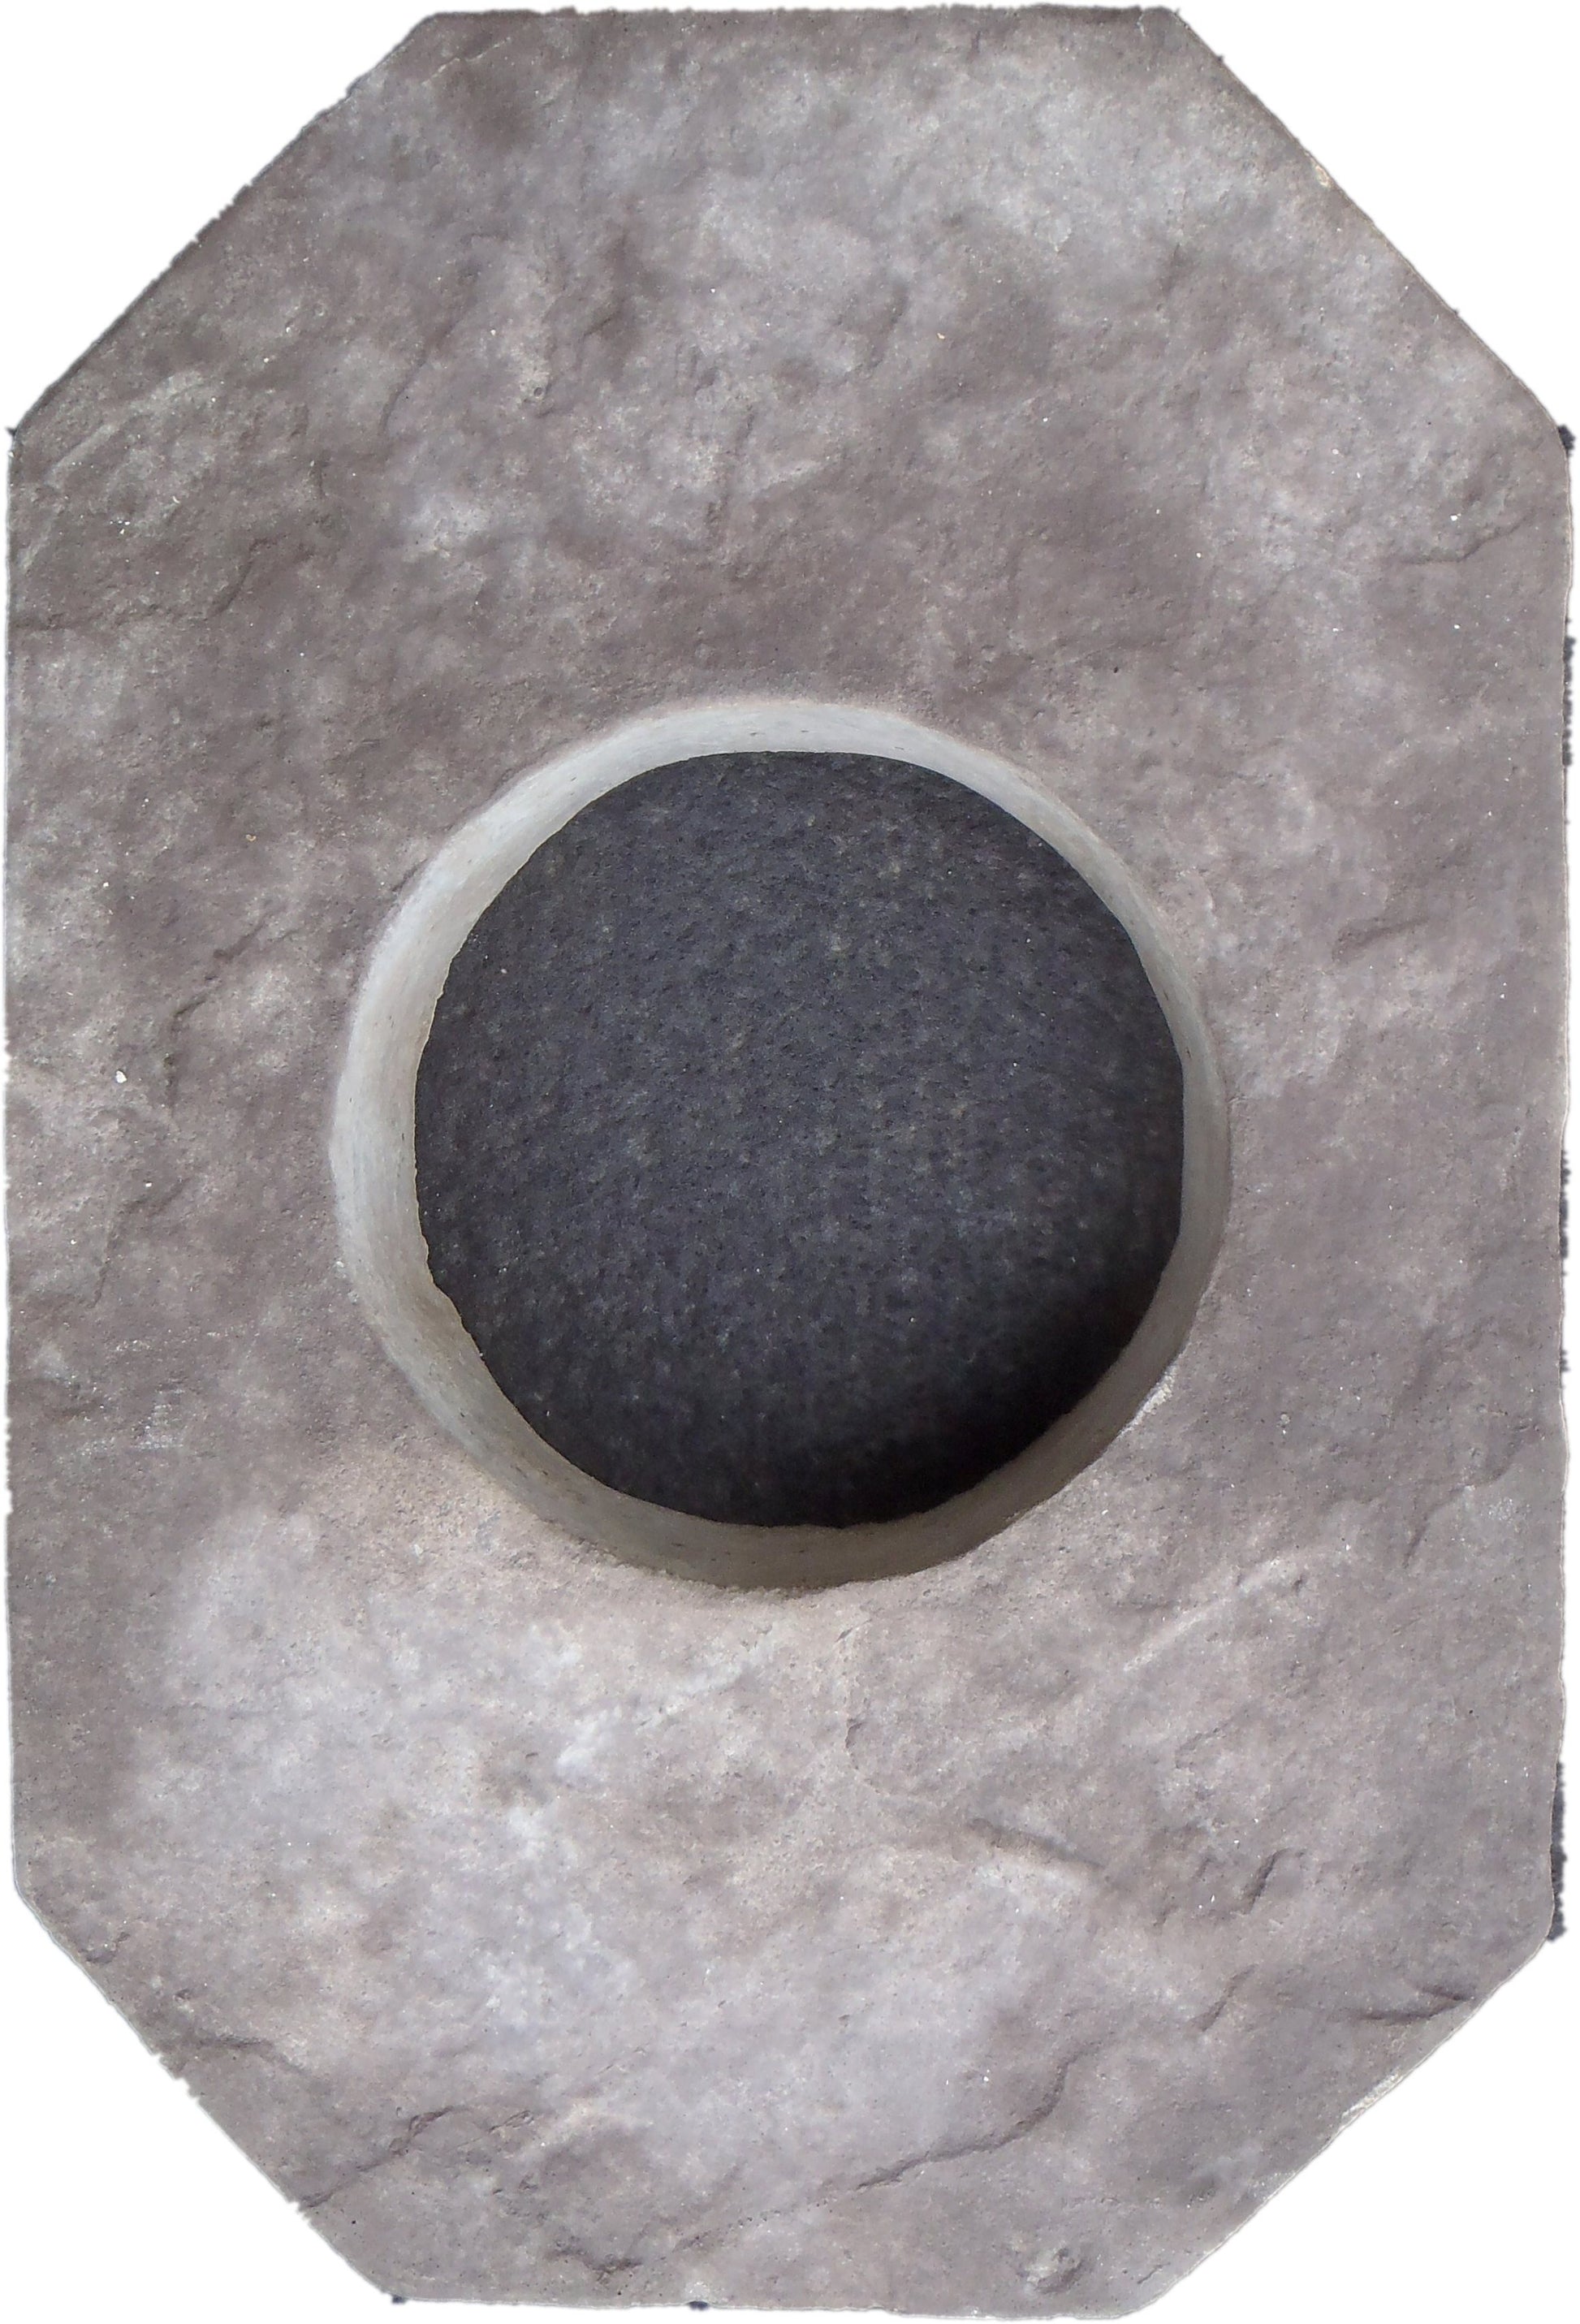 Black Bear Mountain Stone - Stone Veneer - Accessories - Light Box